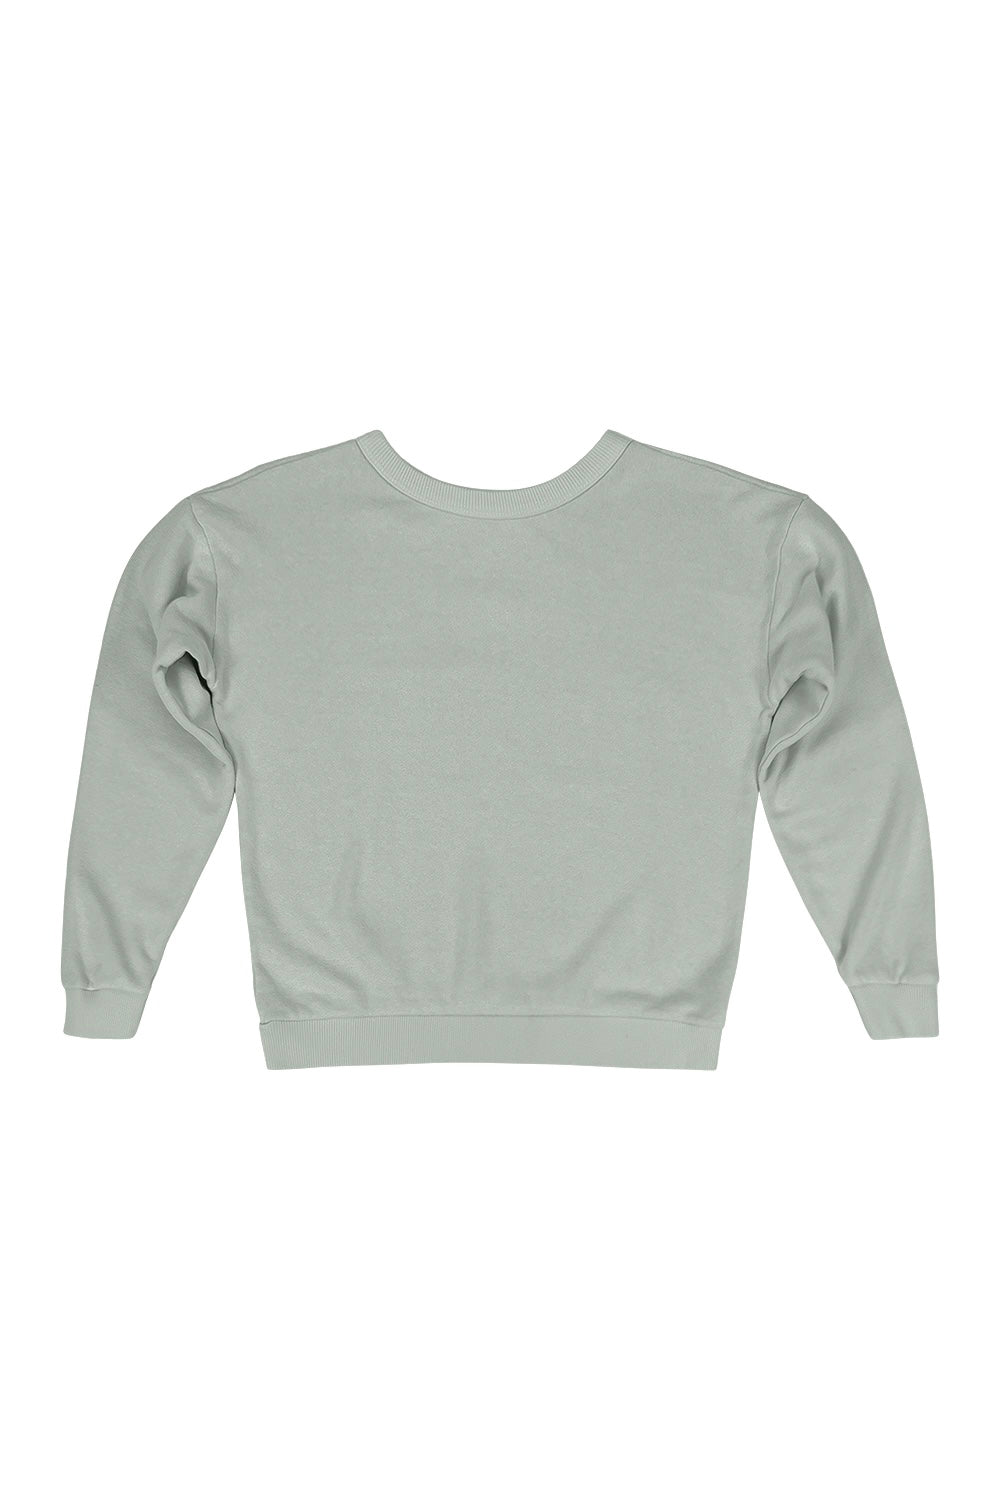 Crux Cropped Sweatshirt | Jungmaven Hemp Clothing & Accessories / Color: Seafoam Green